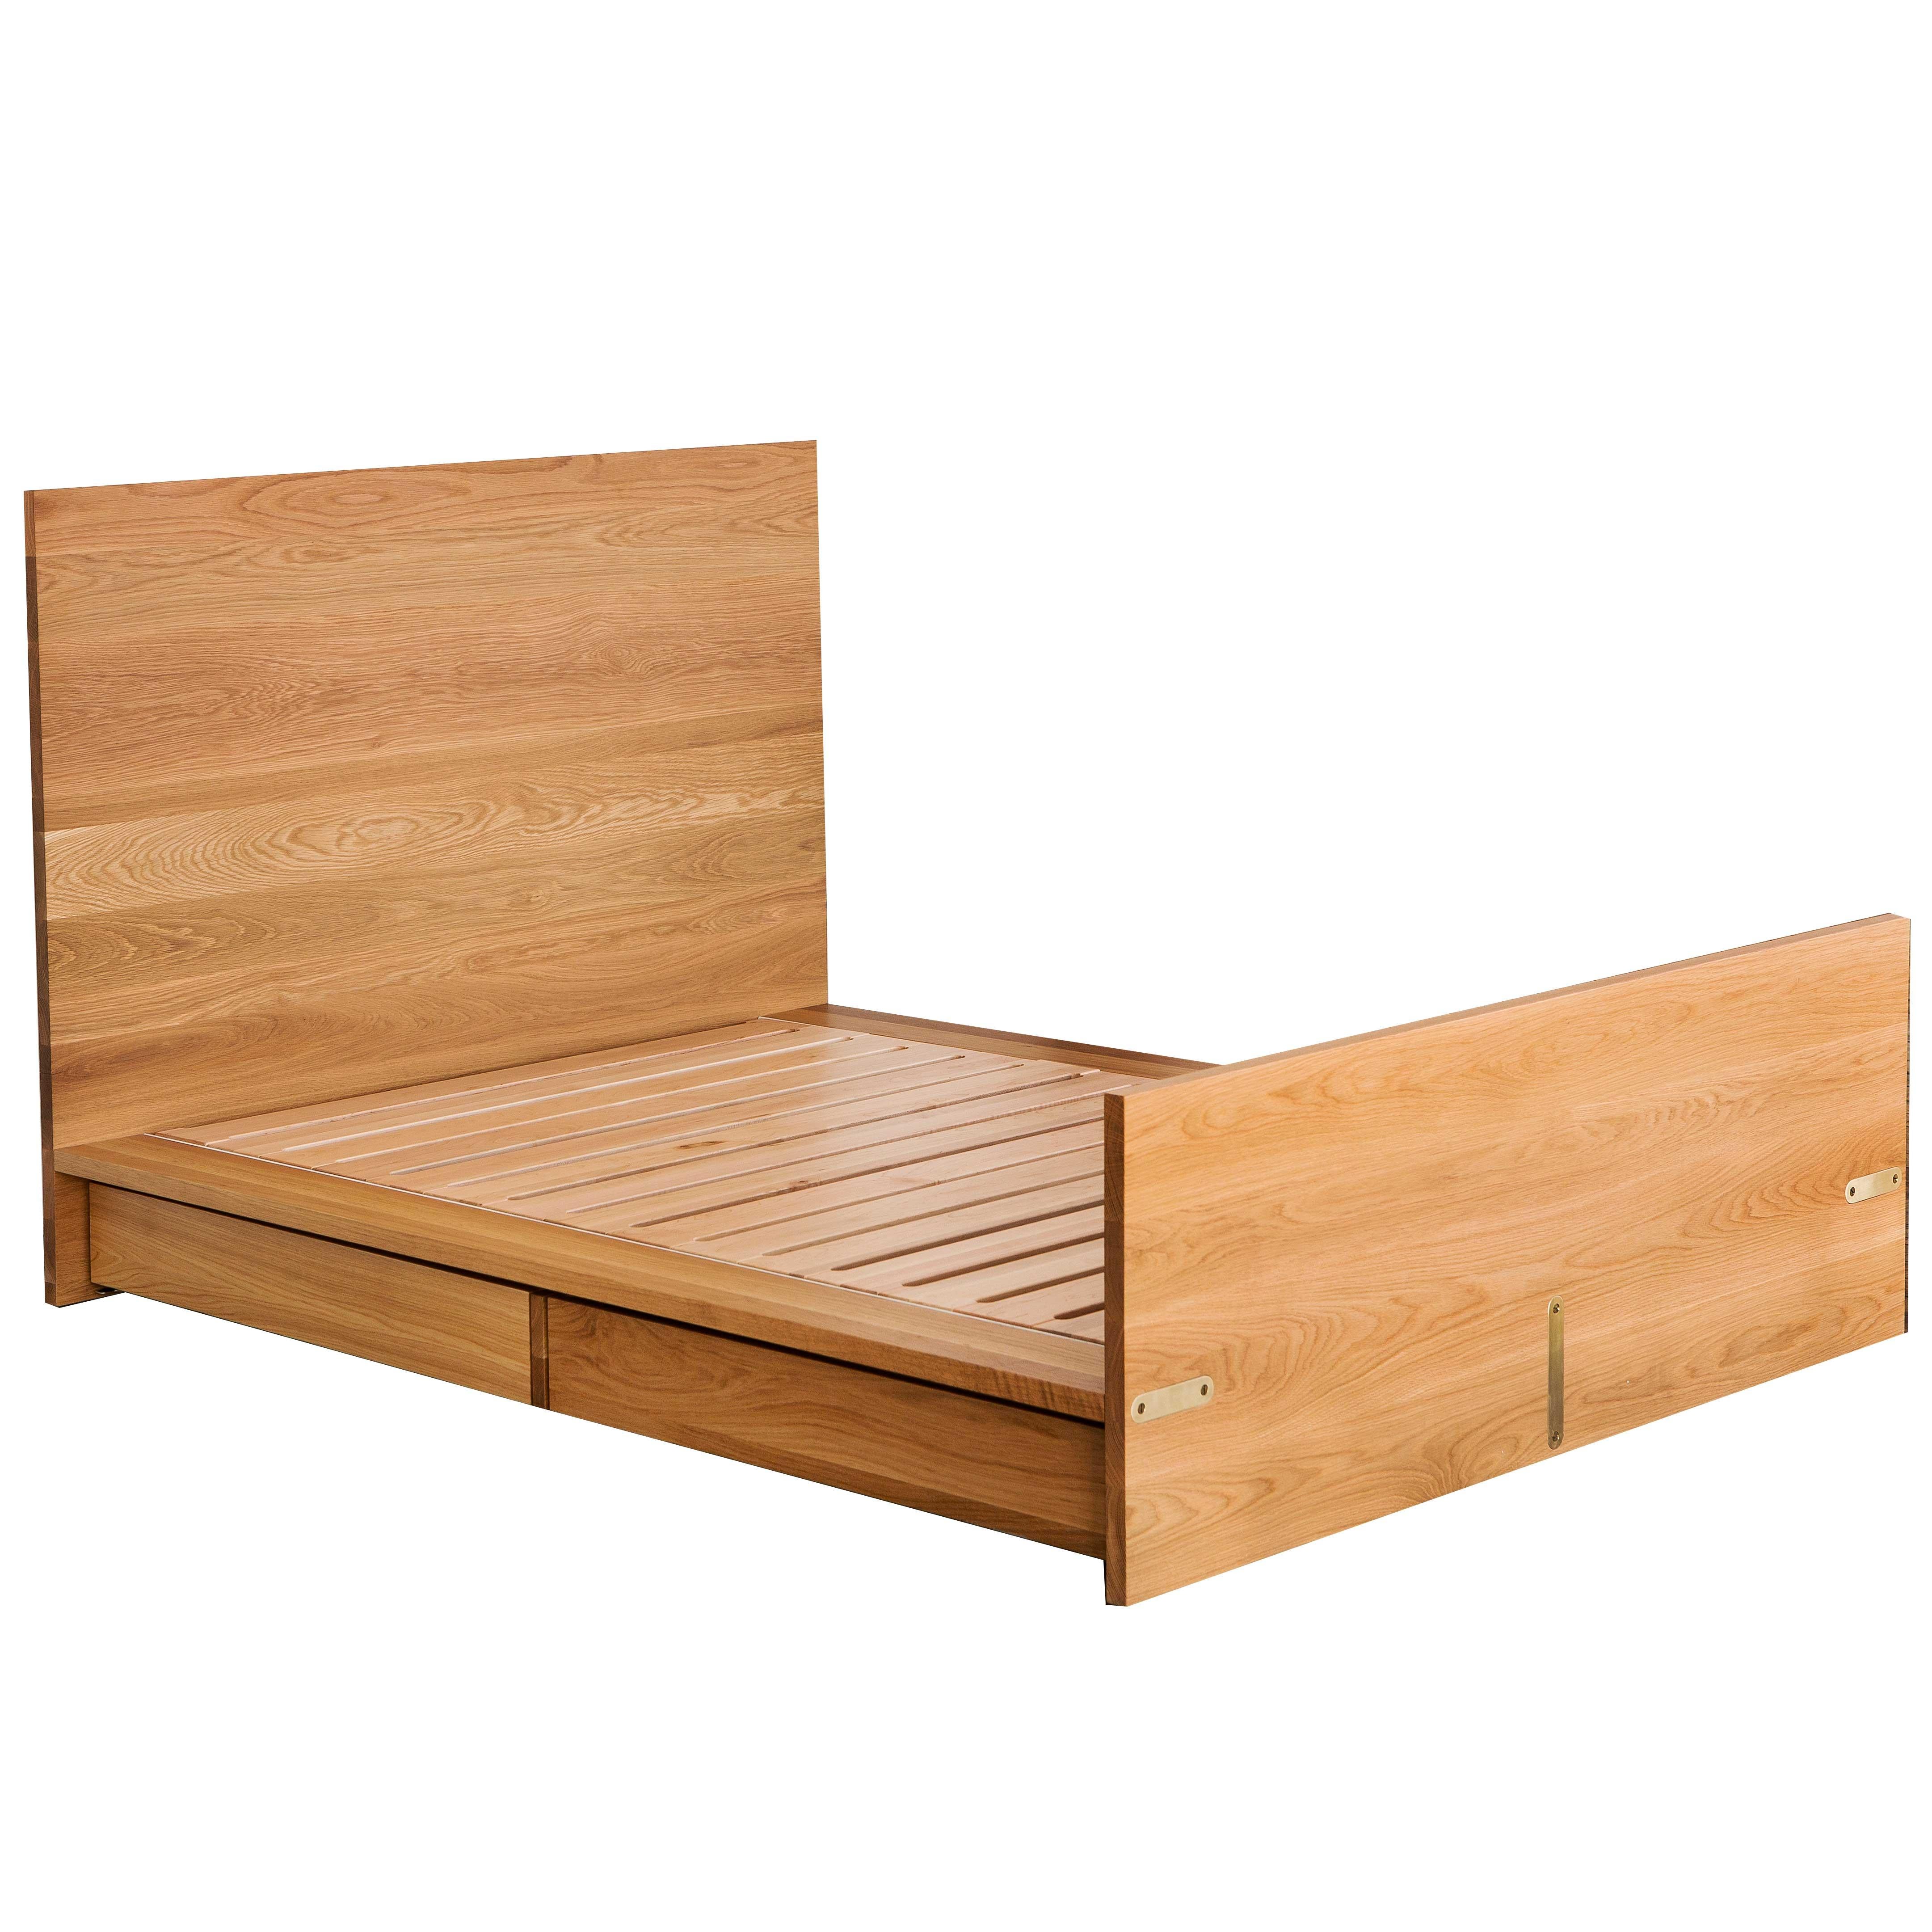 Contemporary White Oak Platform Bed, Wood Queen Platform Bed Frame With Storage